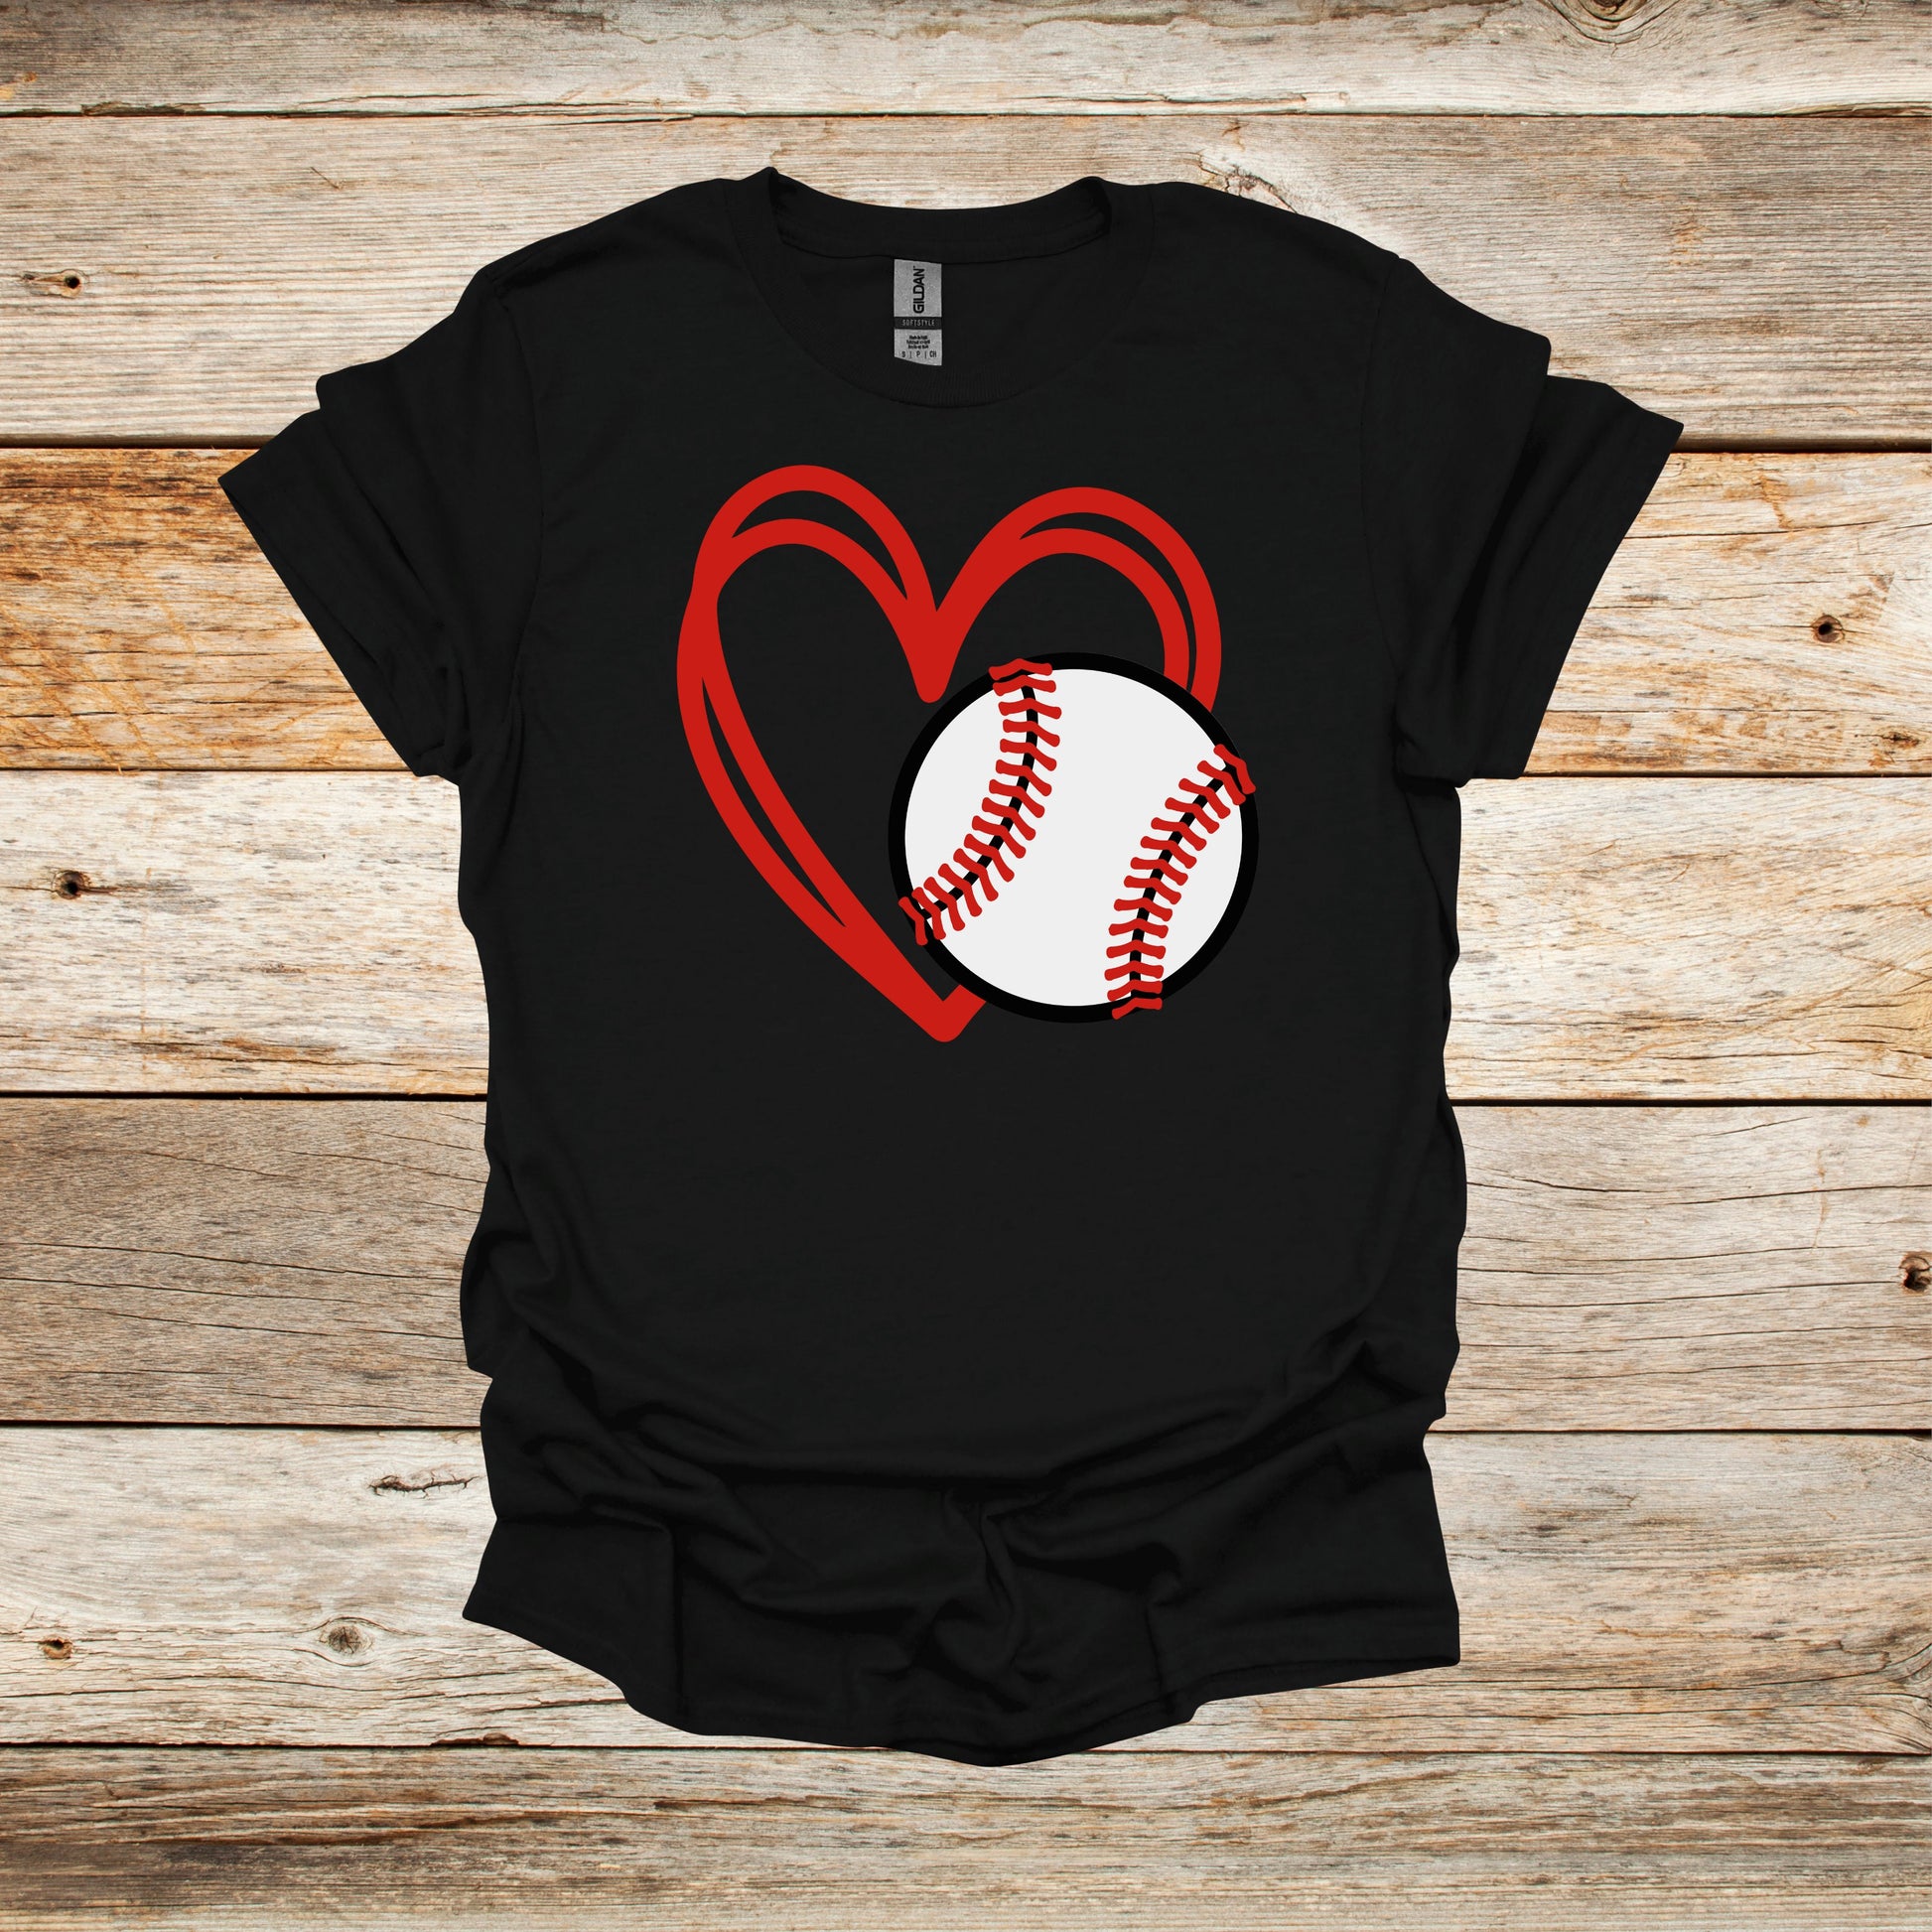 Baseball T-Shirt - Heart Baseball - Adult and Children's Tee Shirts - Sports T-Shirts Graphic Avenue Black Adult Small 